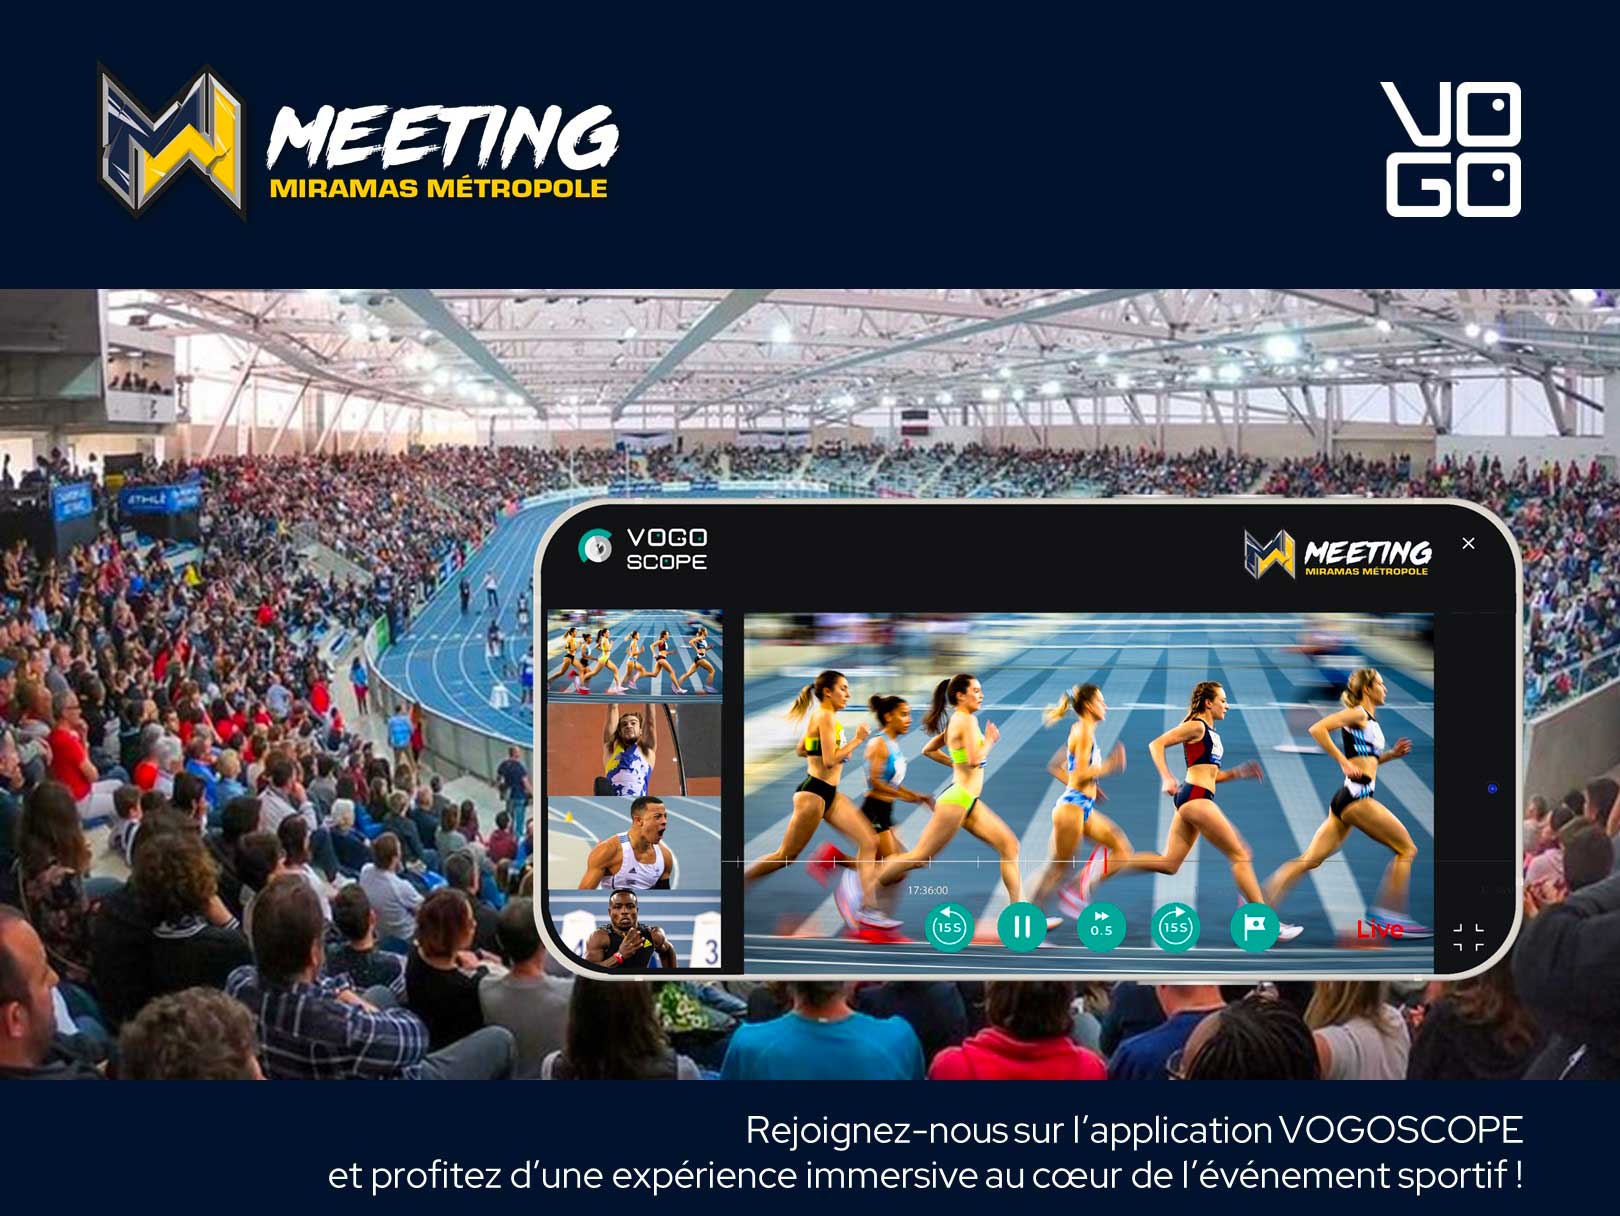 VOGOSCOPE PULSE for athletics fans at MEETING MIRAMAS METROPOLE